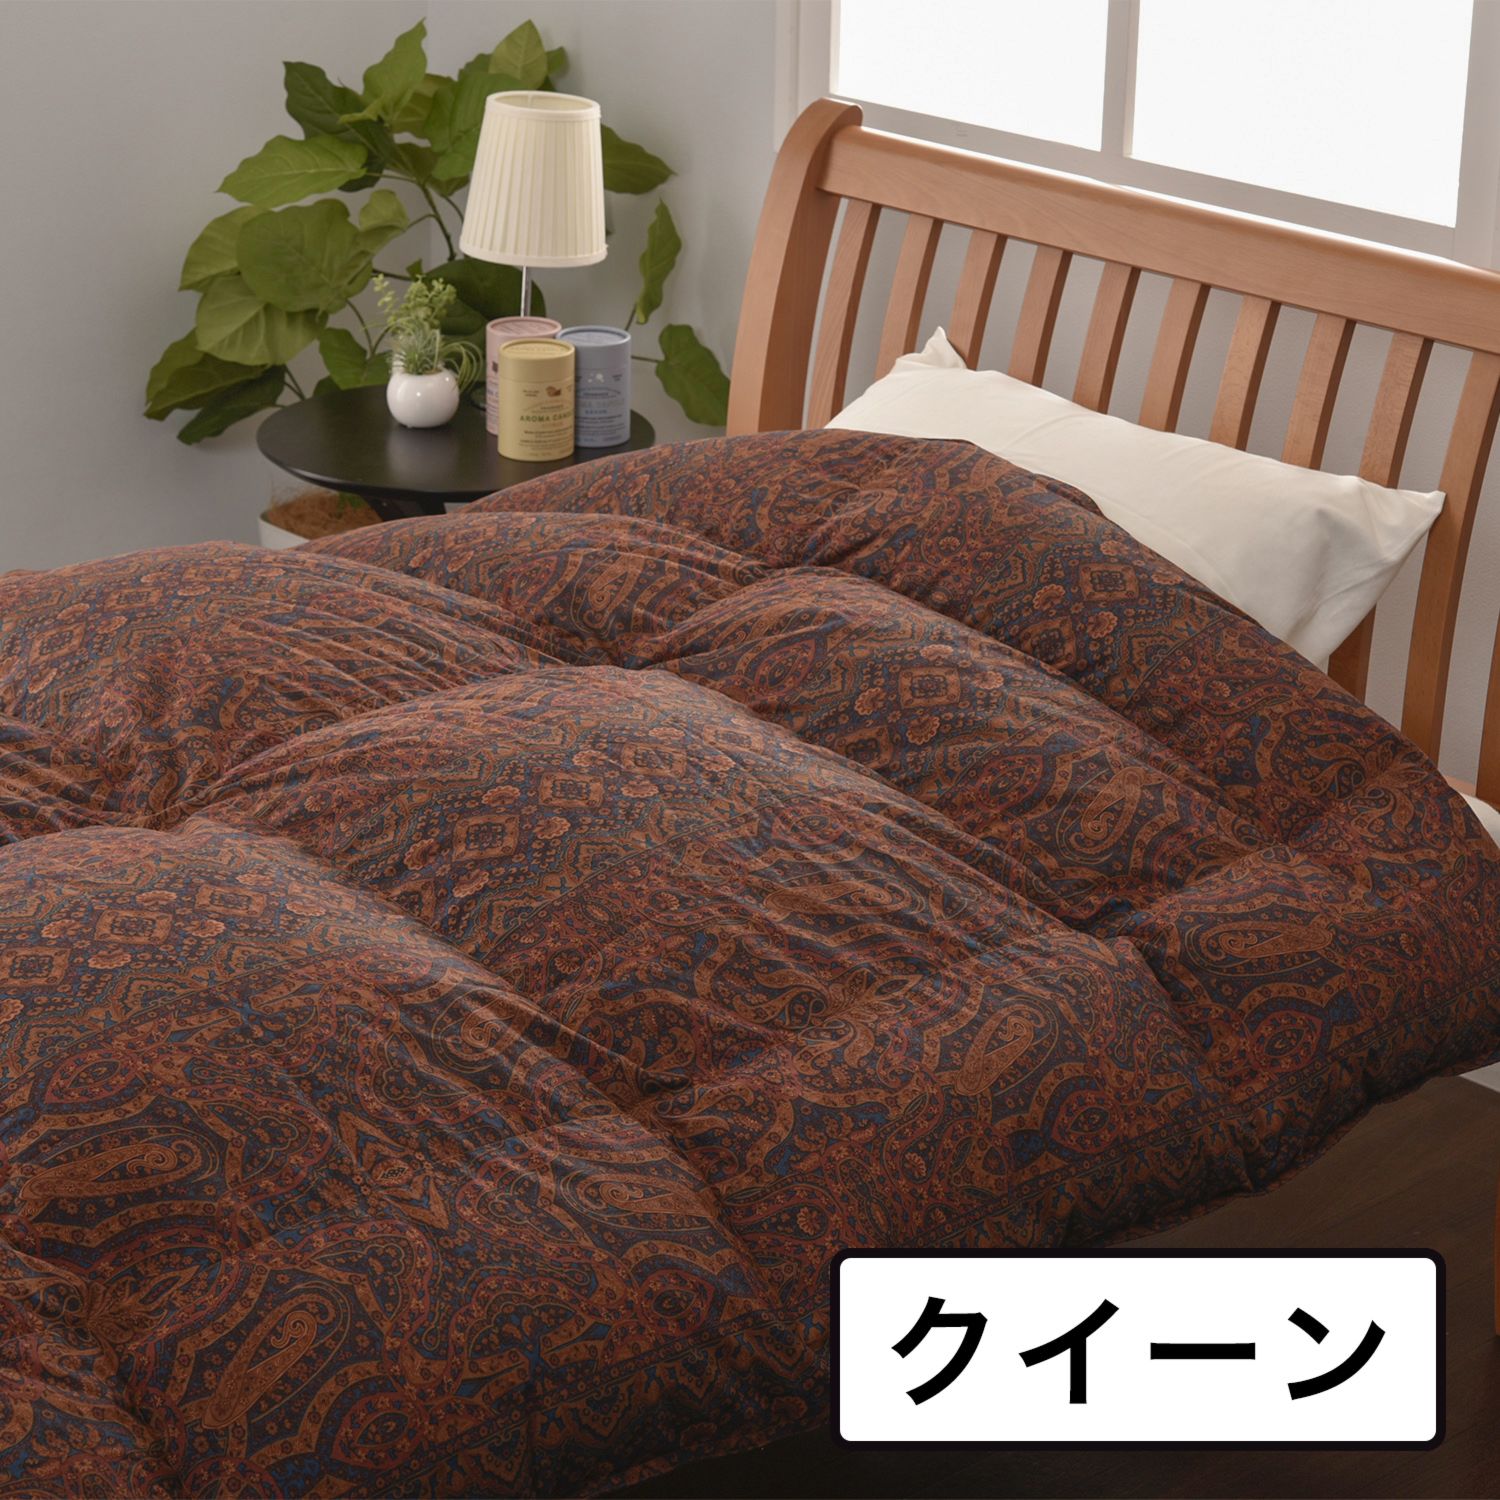 京都西川、かや(蚊帳)、4.5畳用、①、防虫対策、日本製